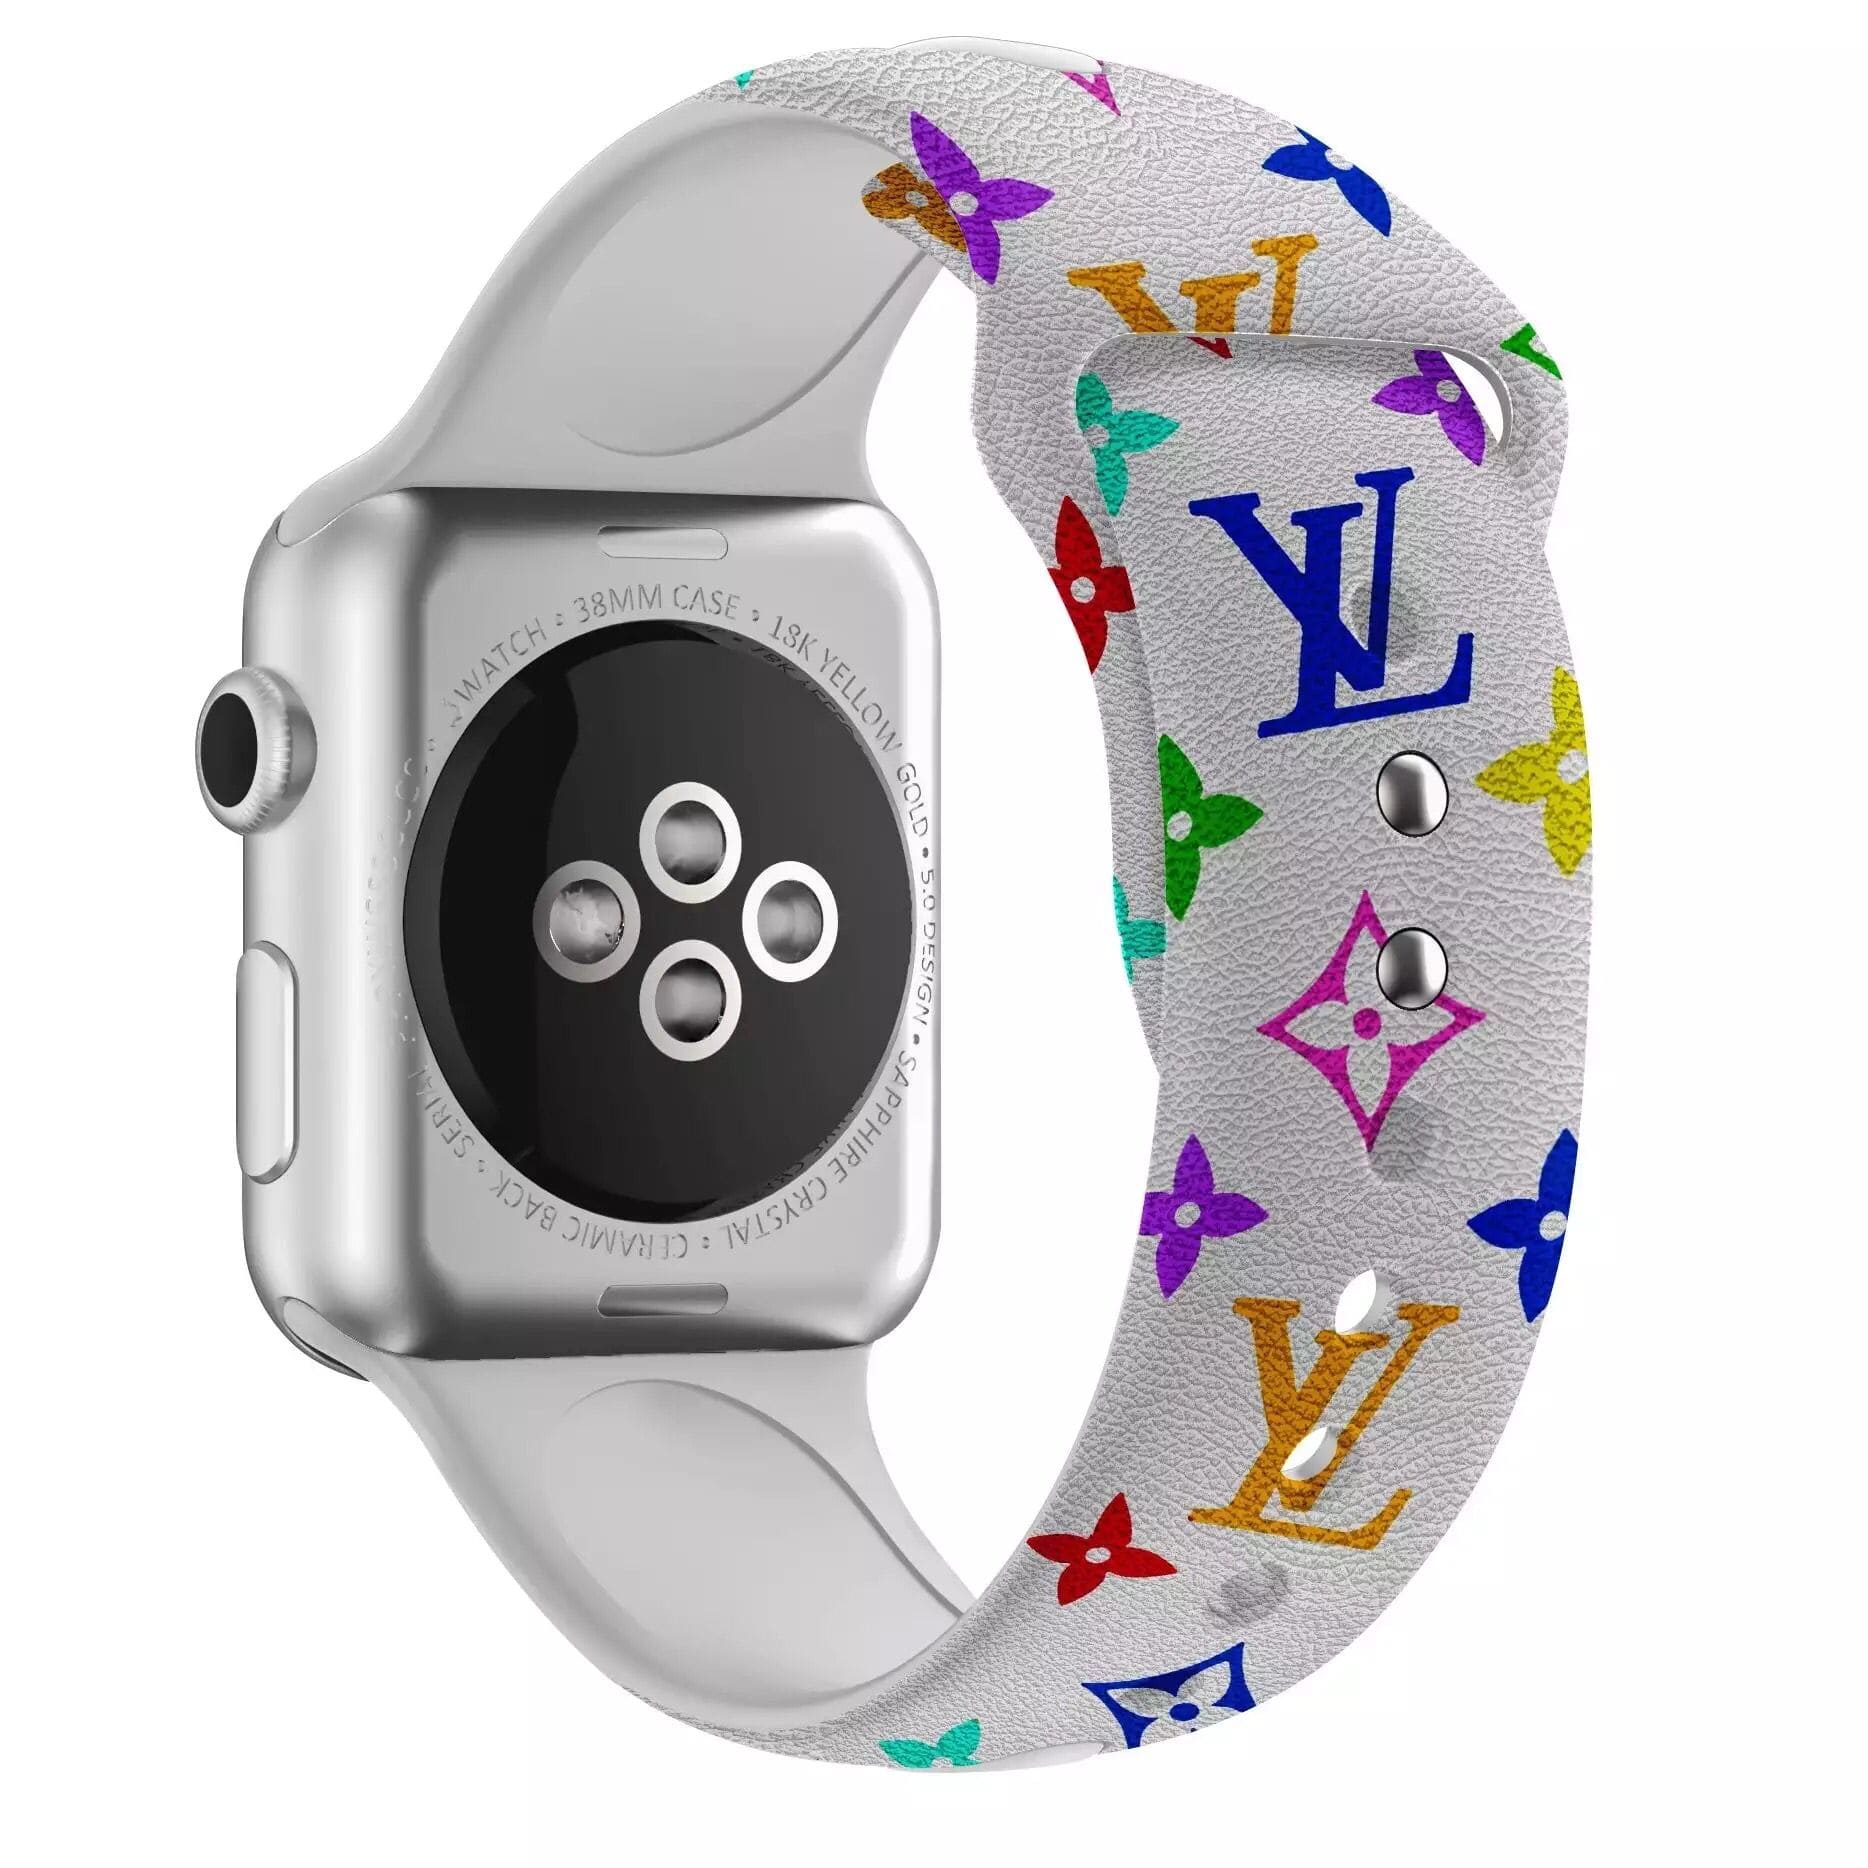 Correa para Apple Watch auténtica de Louis Vuitton.